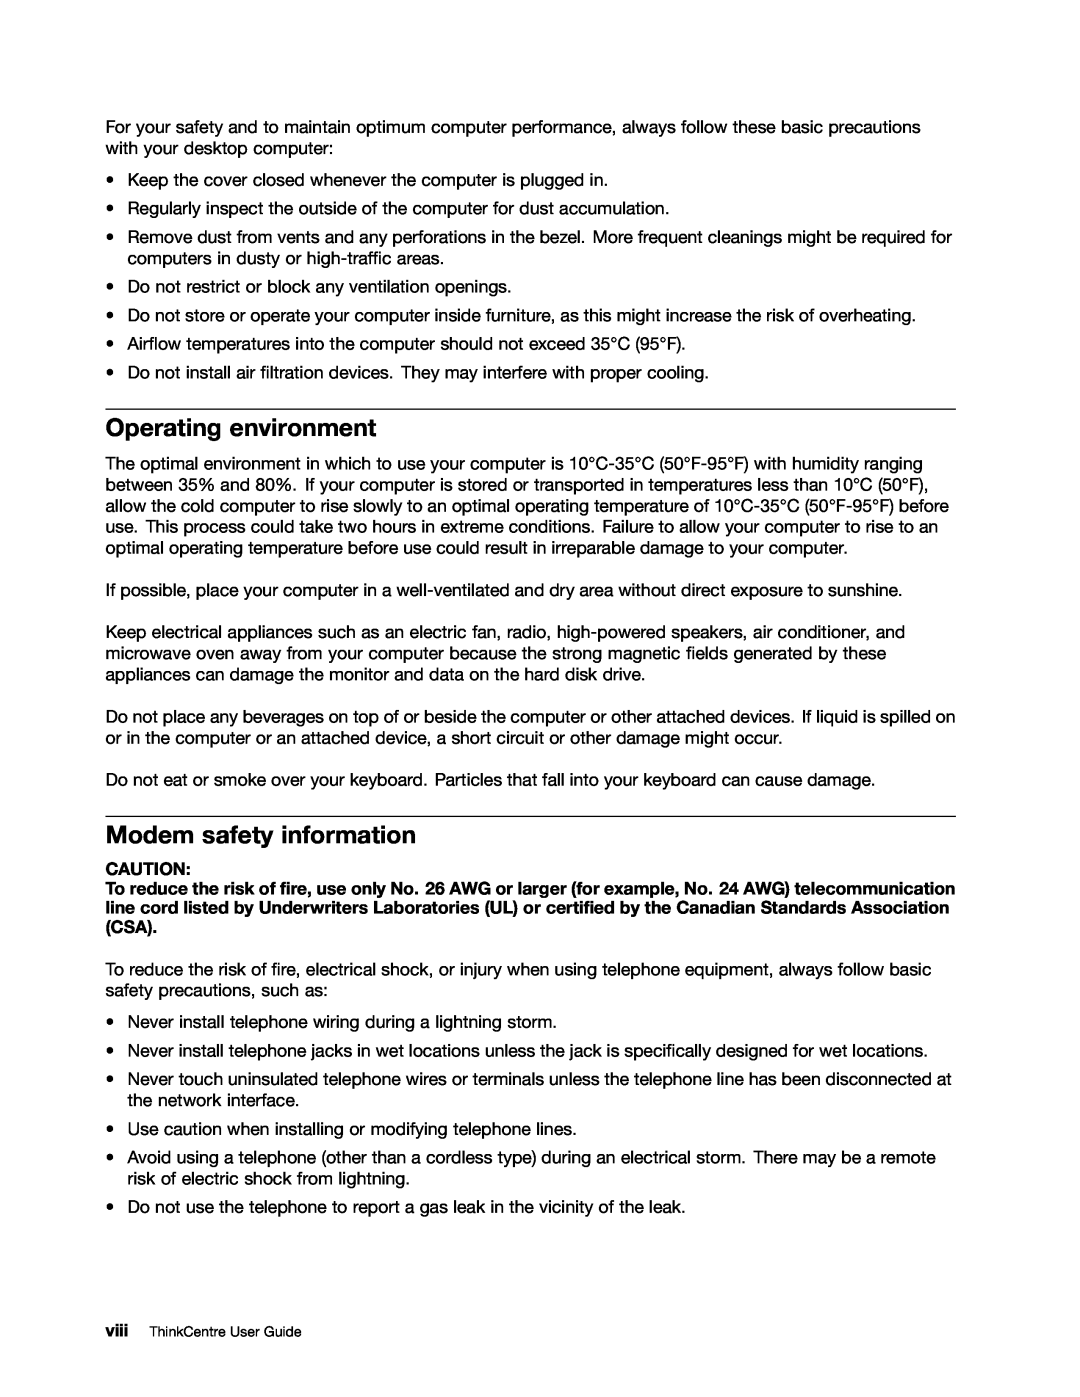 Lenovo 3484JMU manual Operating environment, Modem safety information 